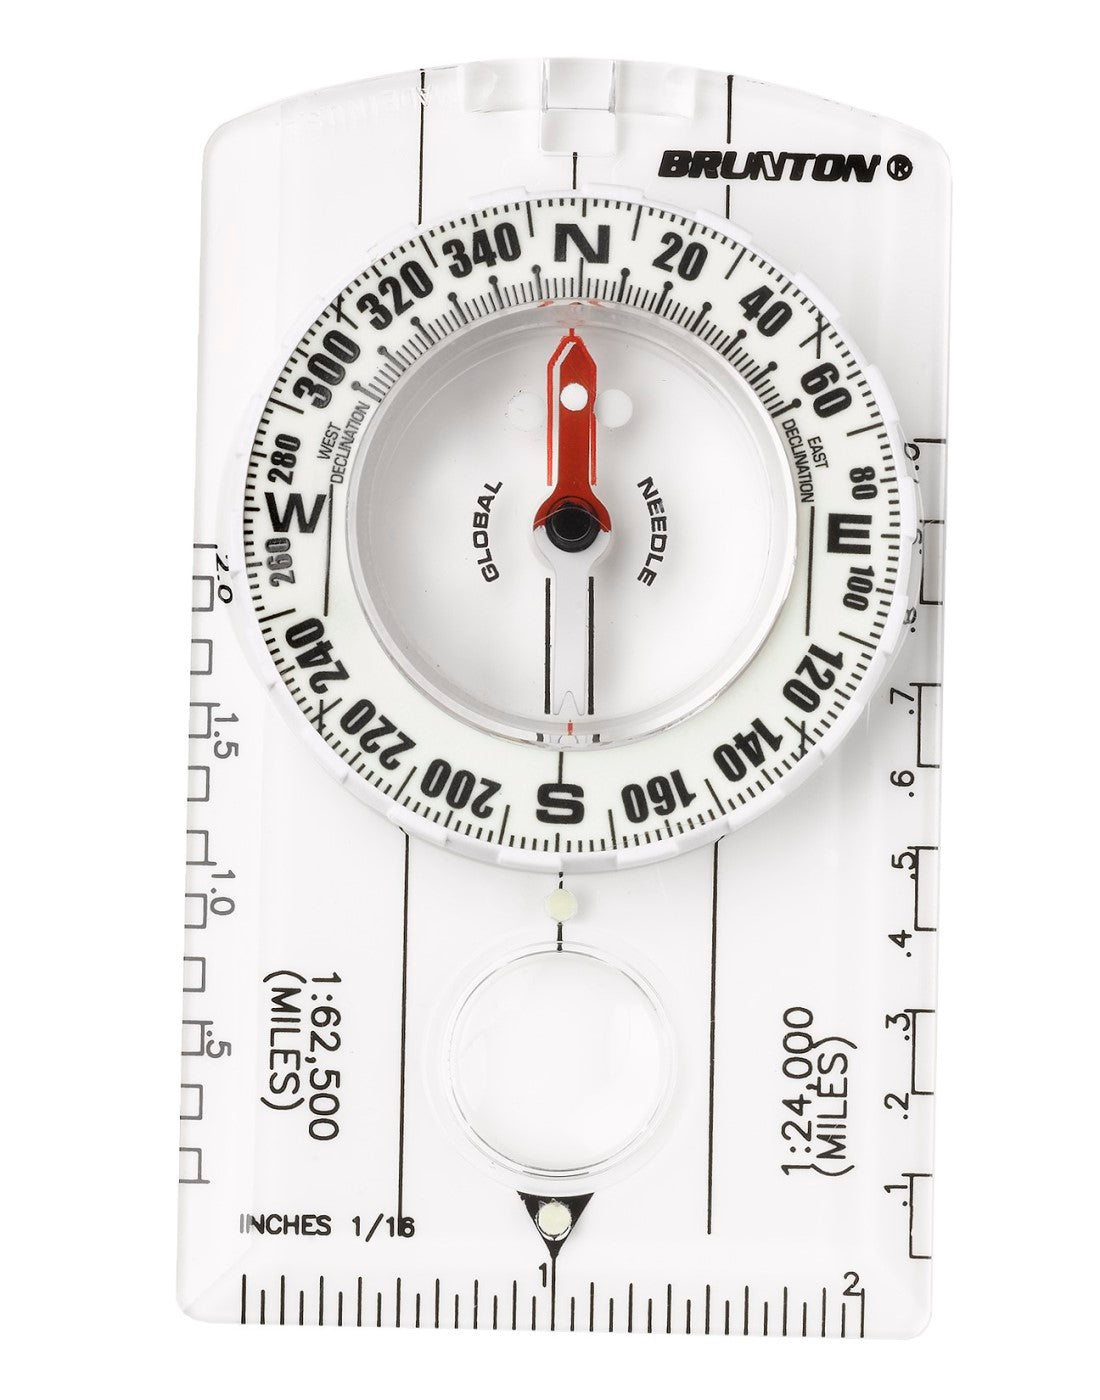 Brunton 8010 Luminescent Compass - top down view